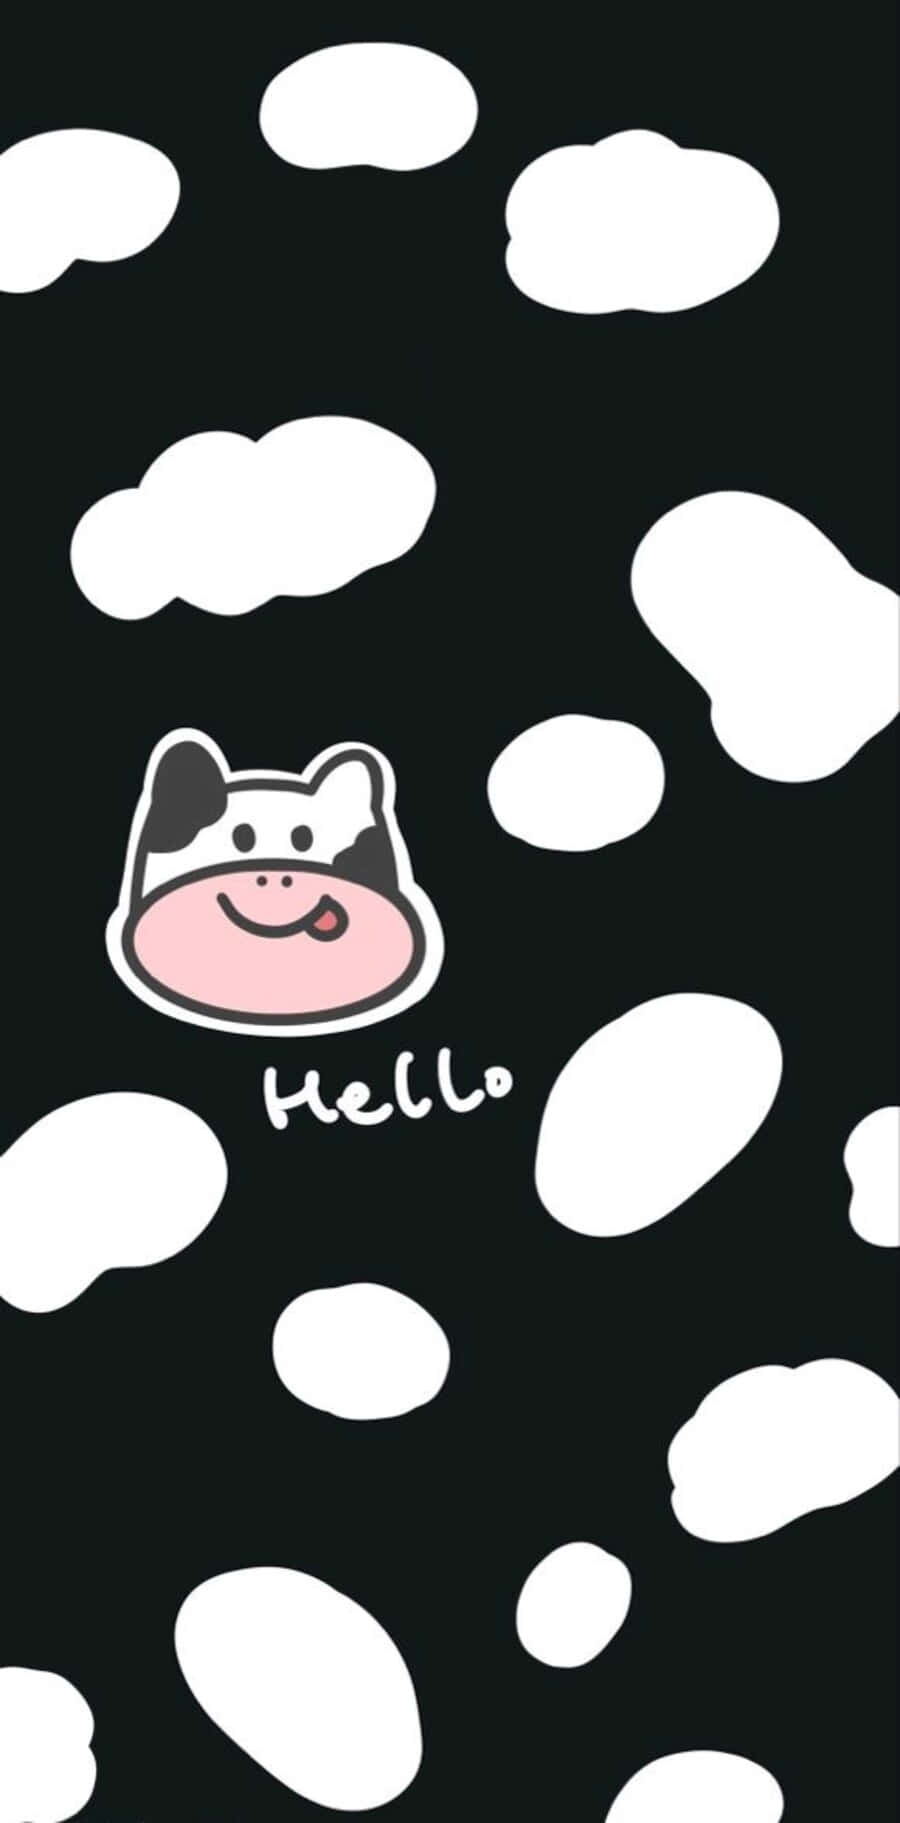 Adorable Kawaii Cute Cow in a playful mood Wallpaper